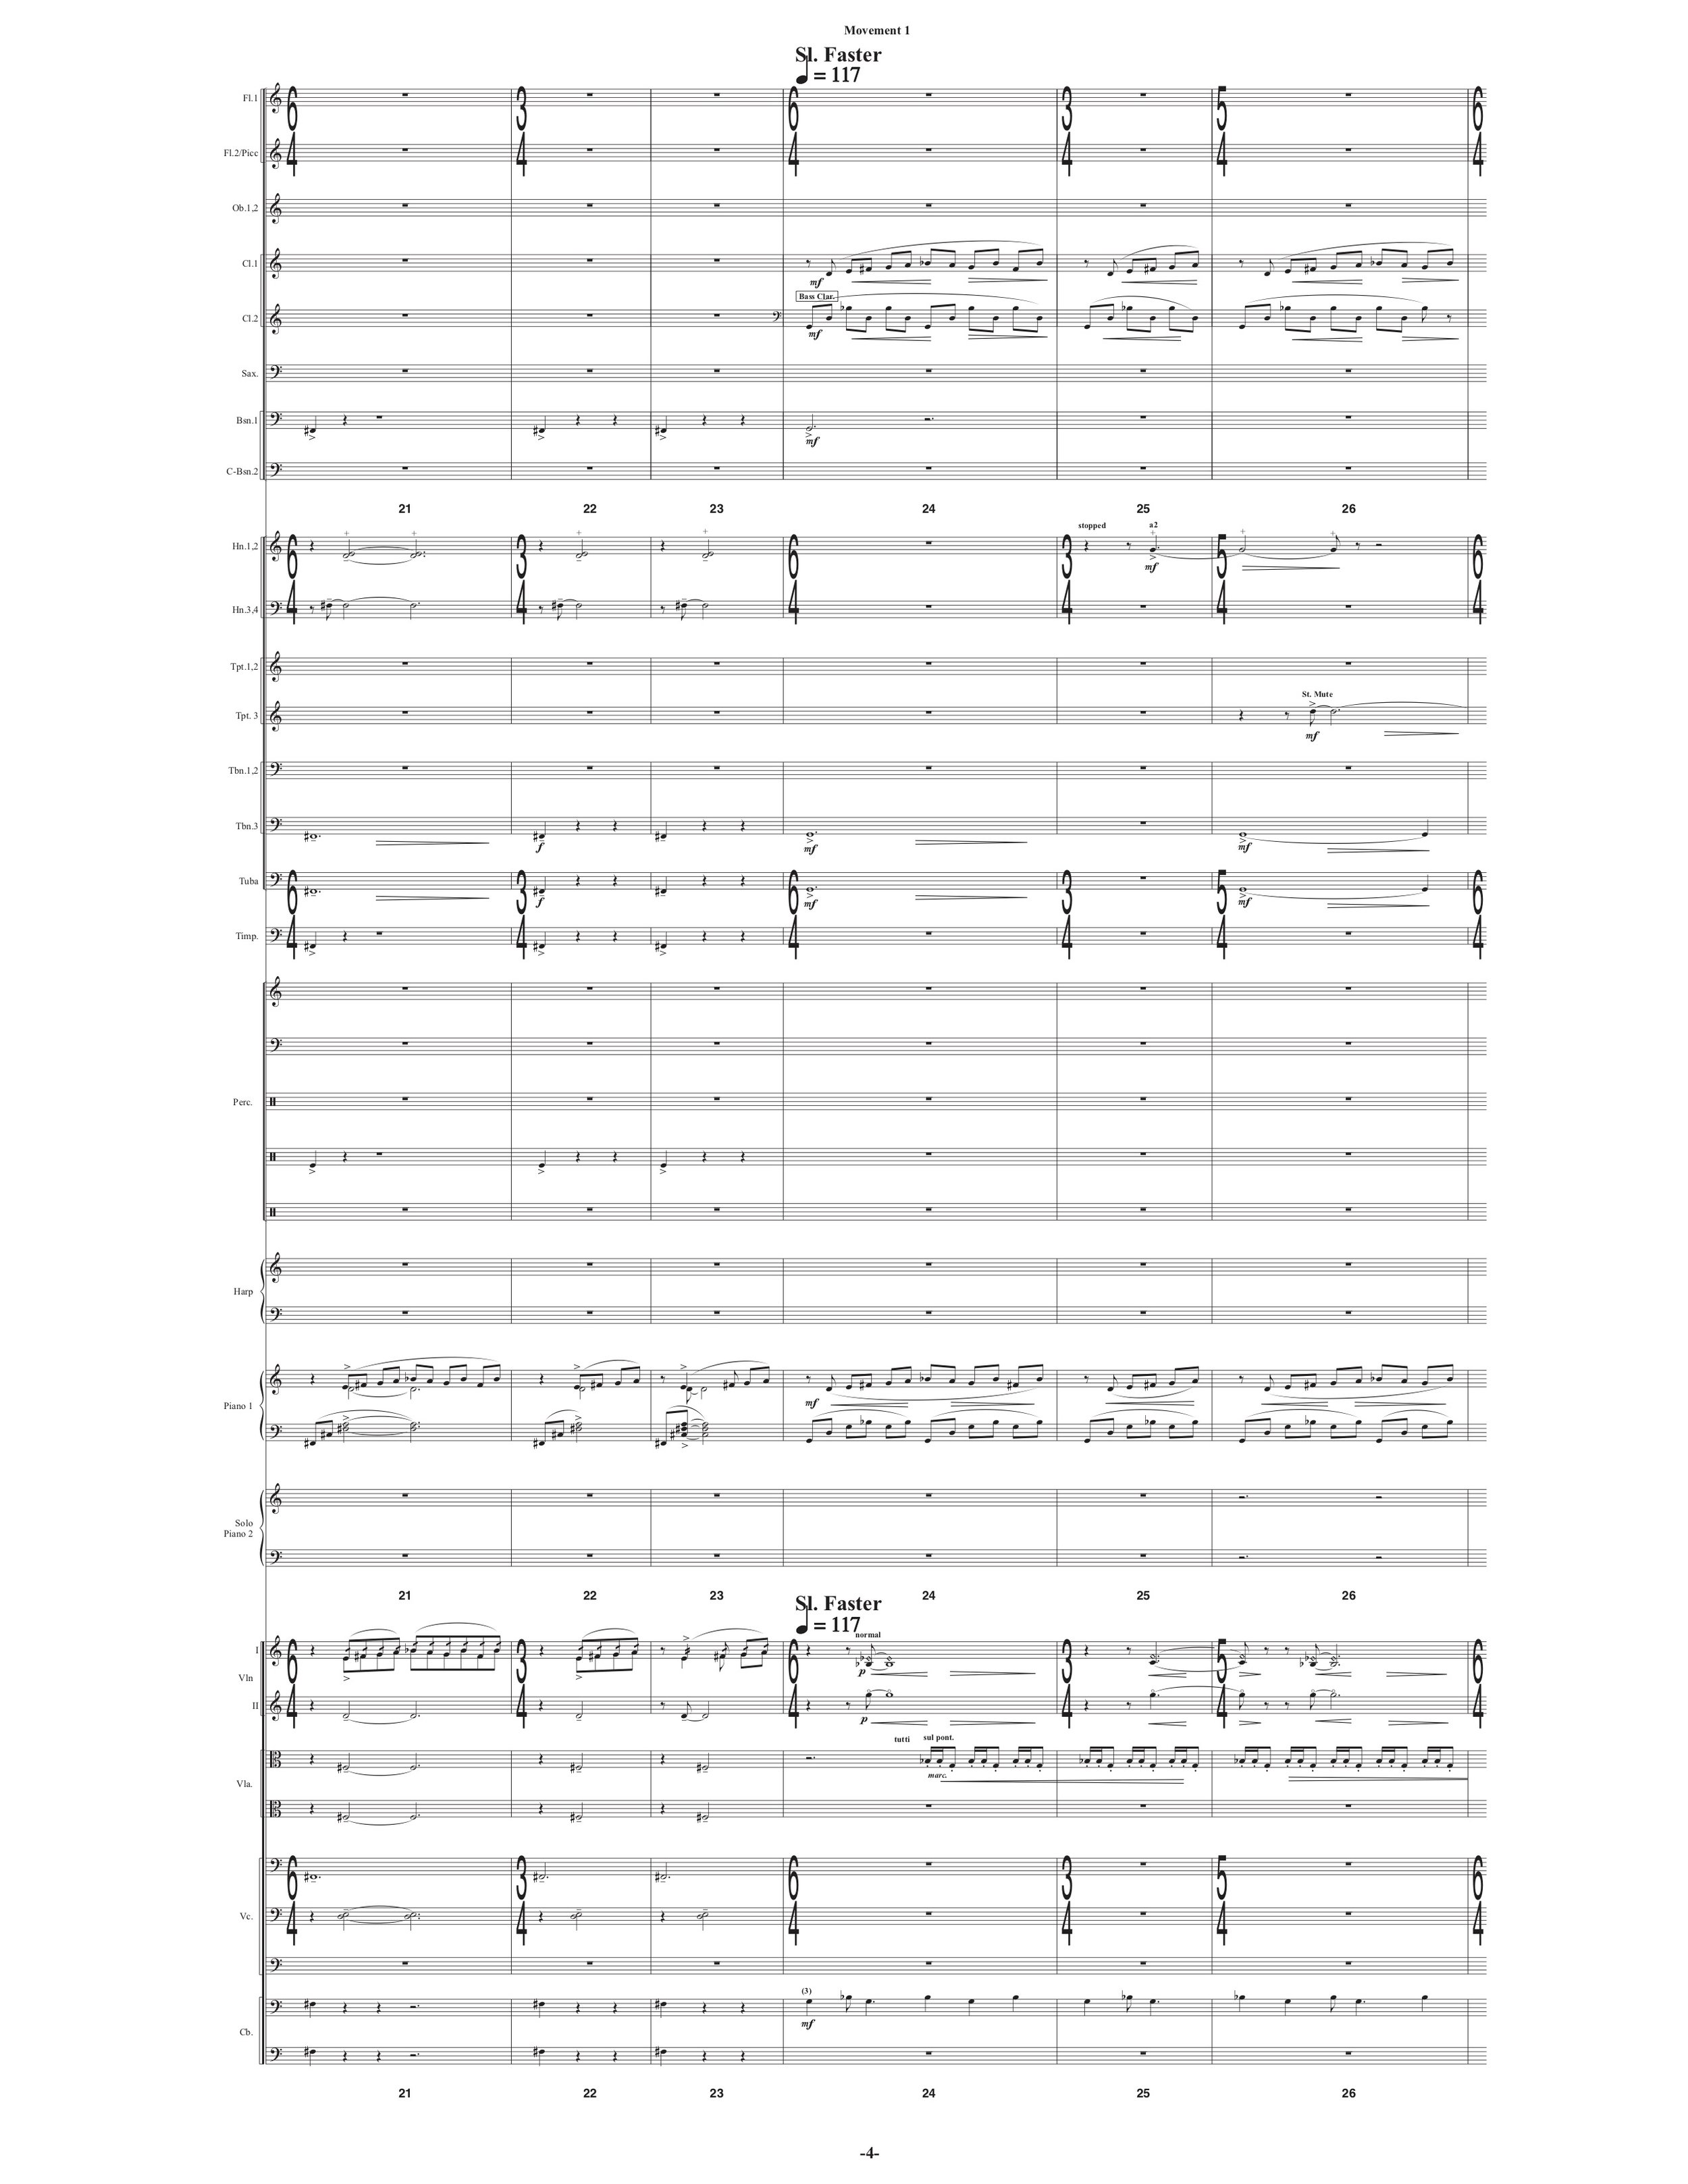 Symphony_Orch & 2 Pianos p9.jpg